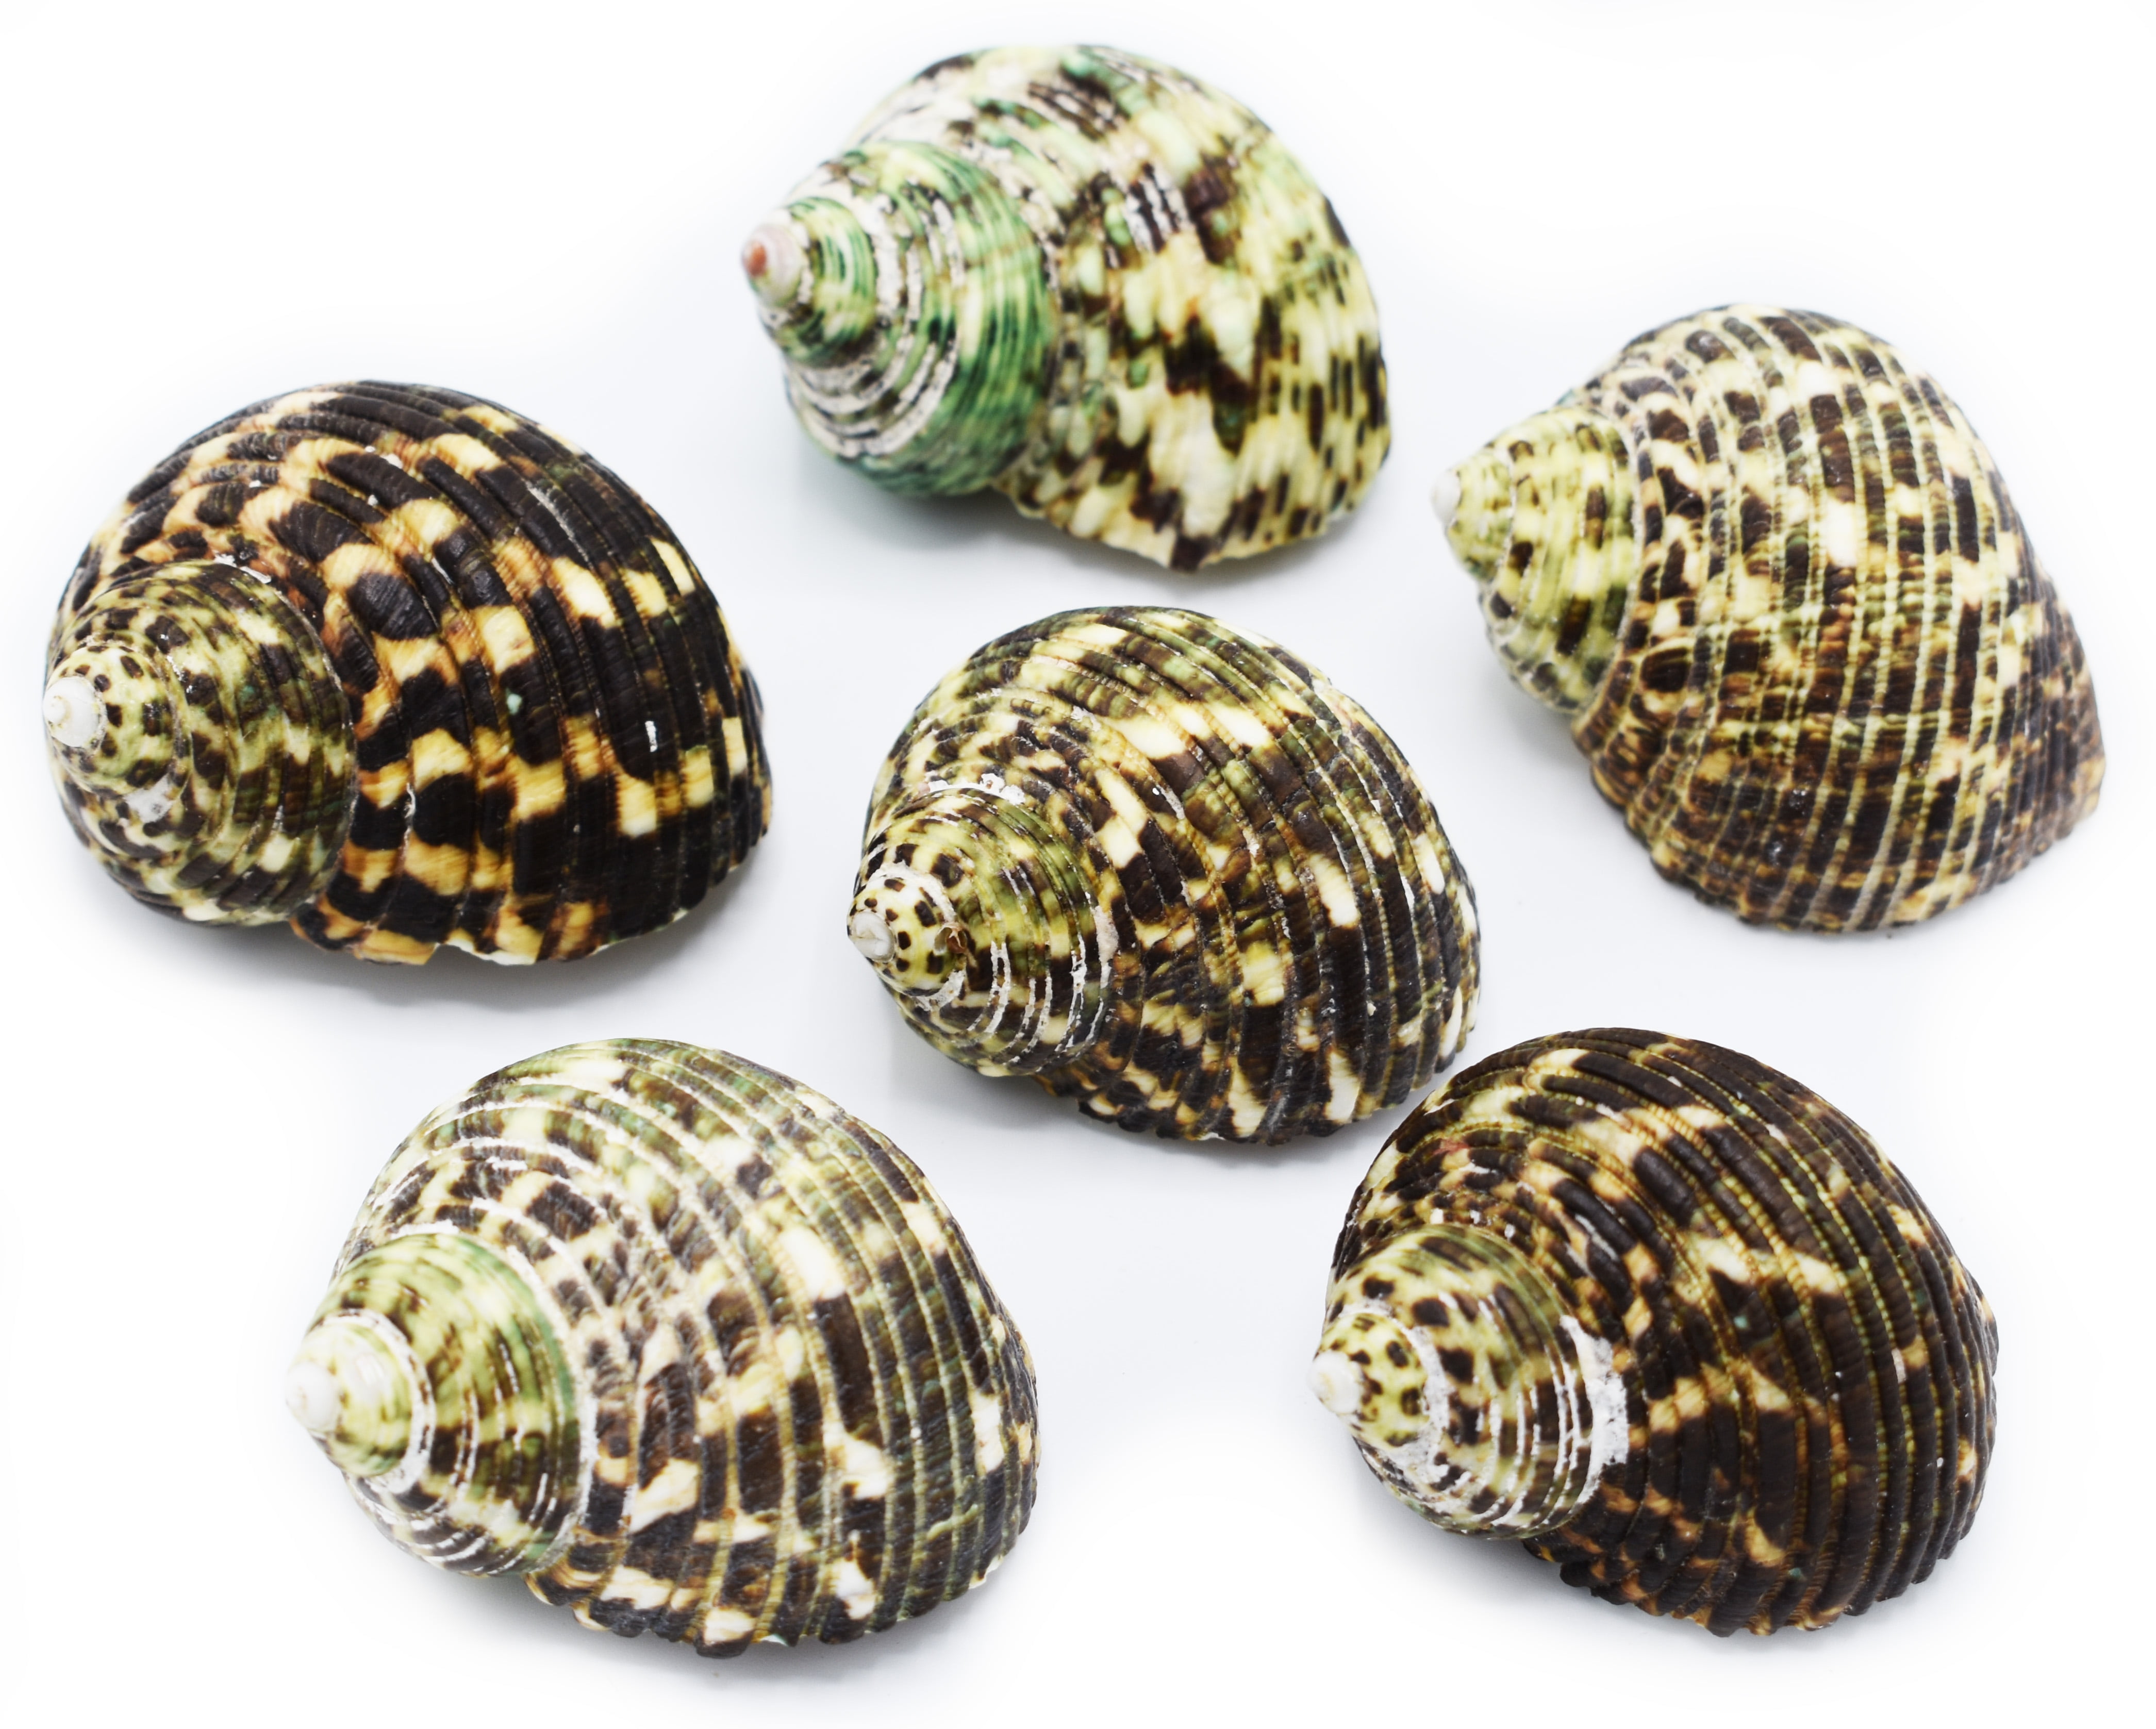 pcs Hermit Crab Shells Seashell Natural Turbo Shells Medium Large Sea Conch 1-3.5 Inch 15